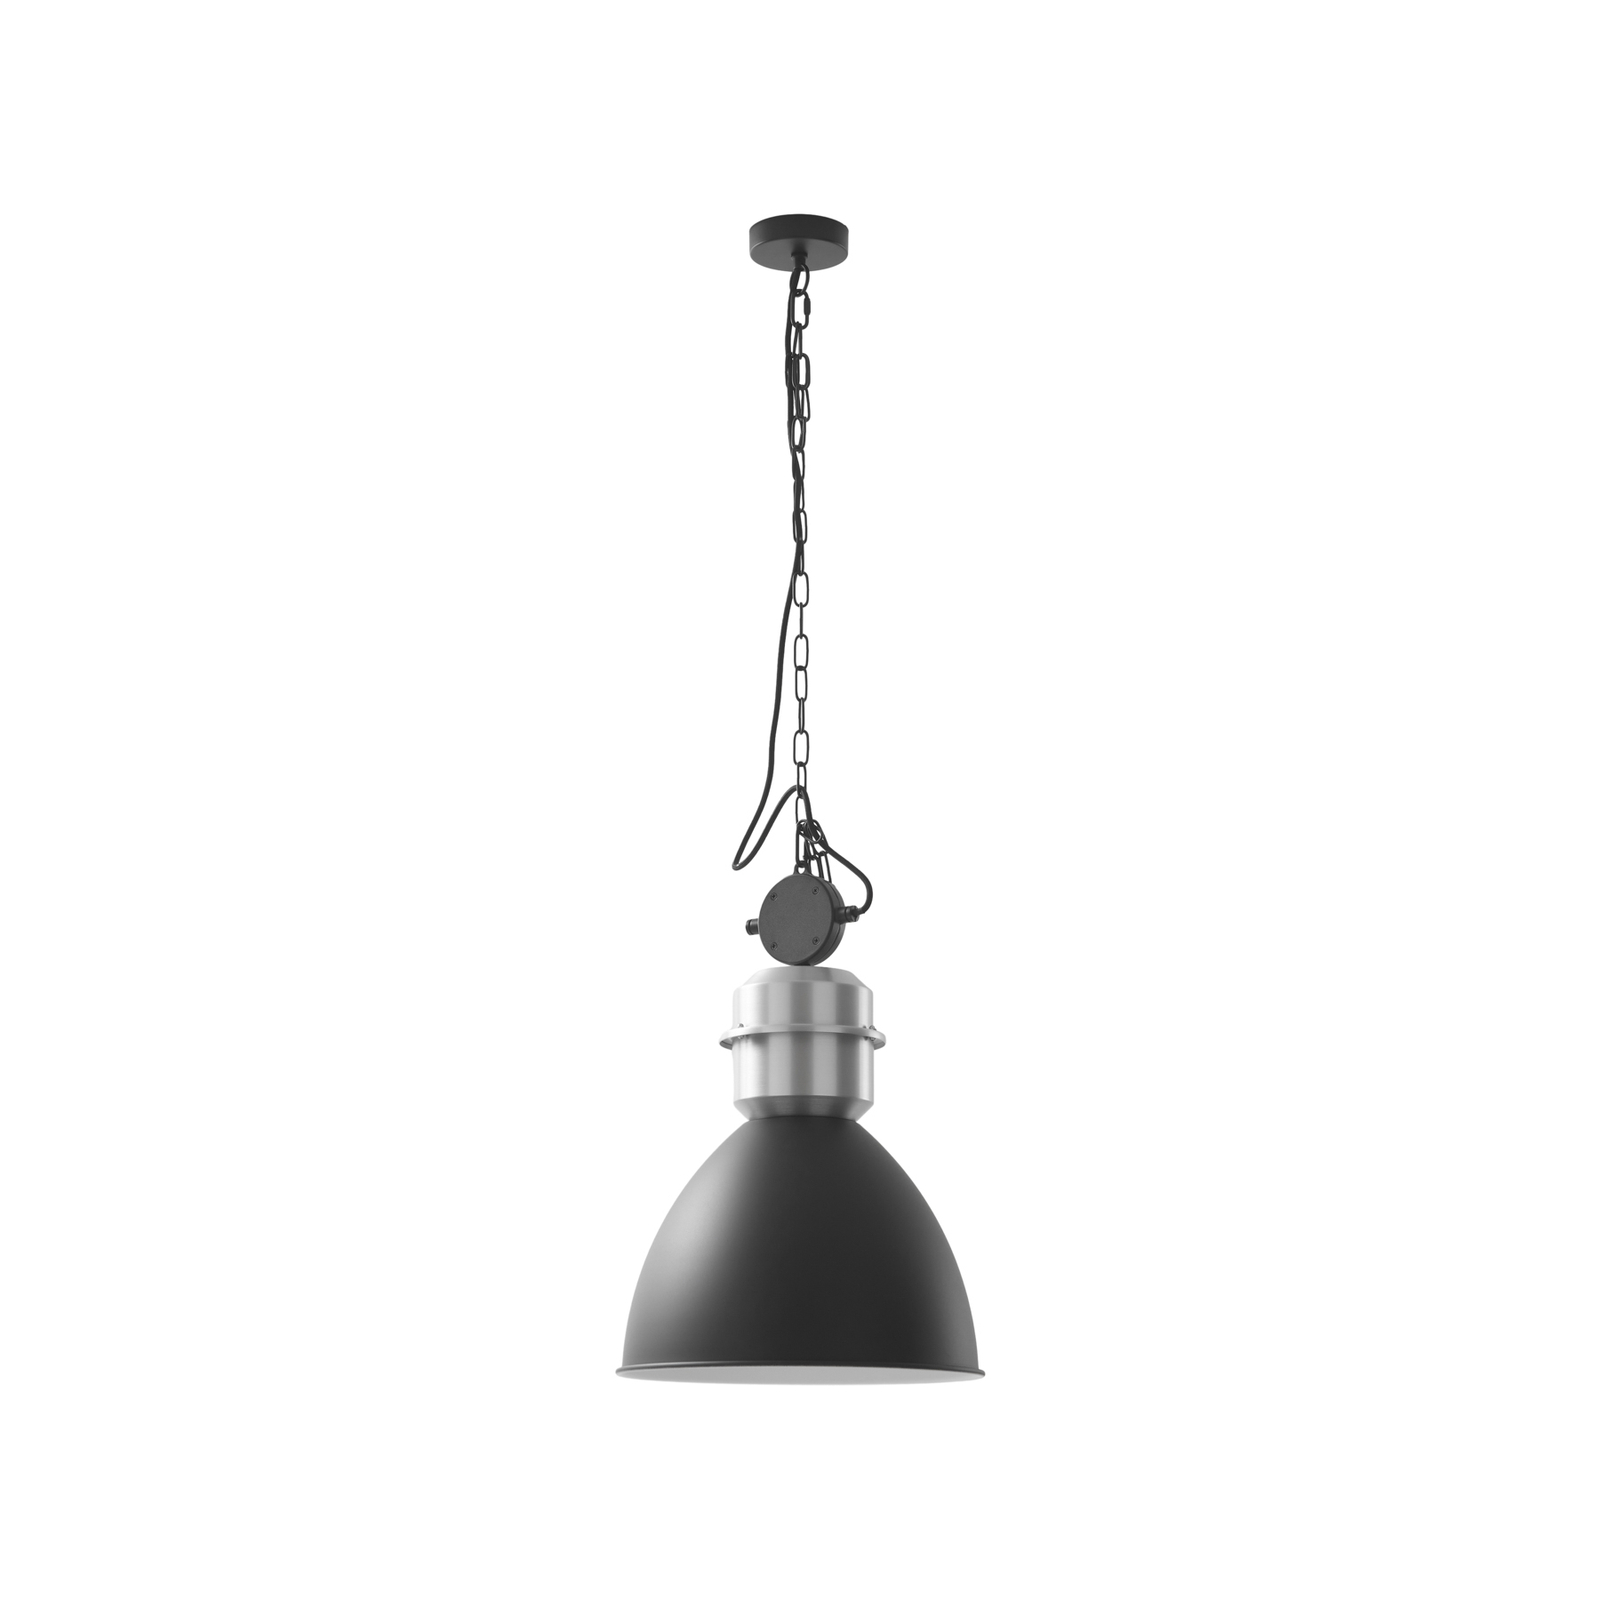 Lucande hanglamp Kaeloria, zwart/zilver, aluminium, Ø 35 cm